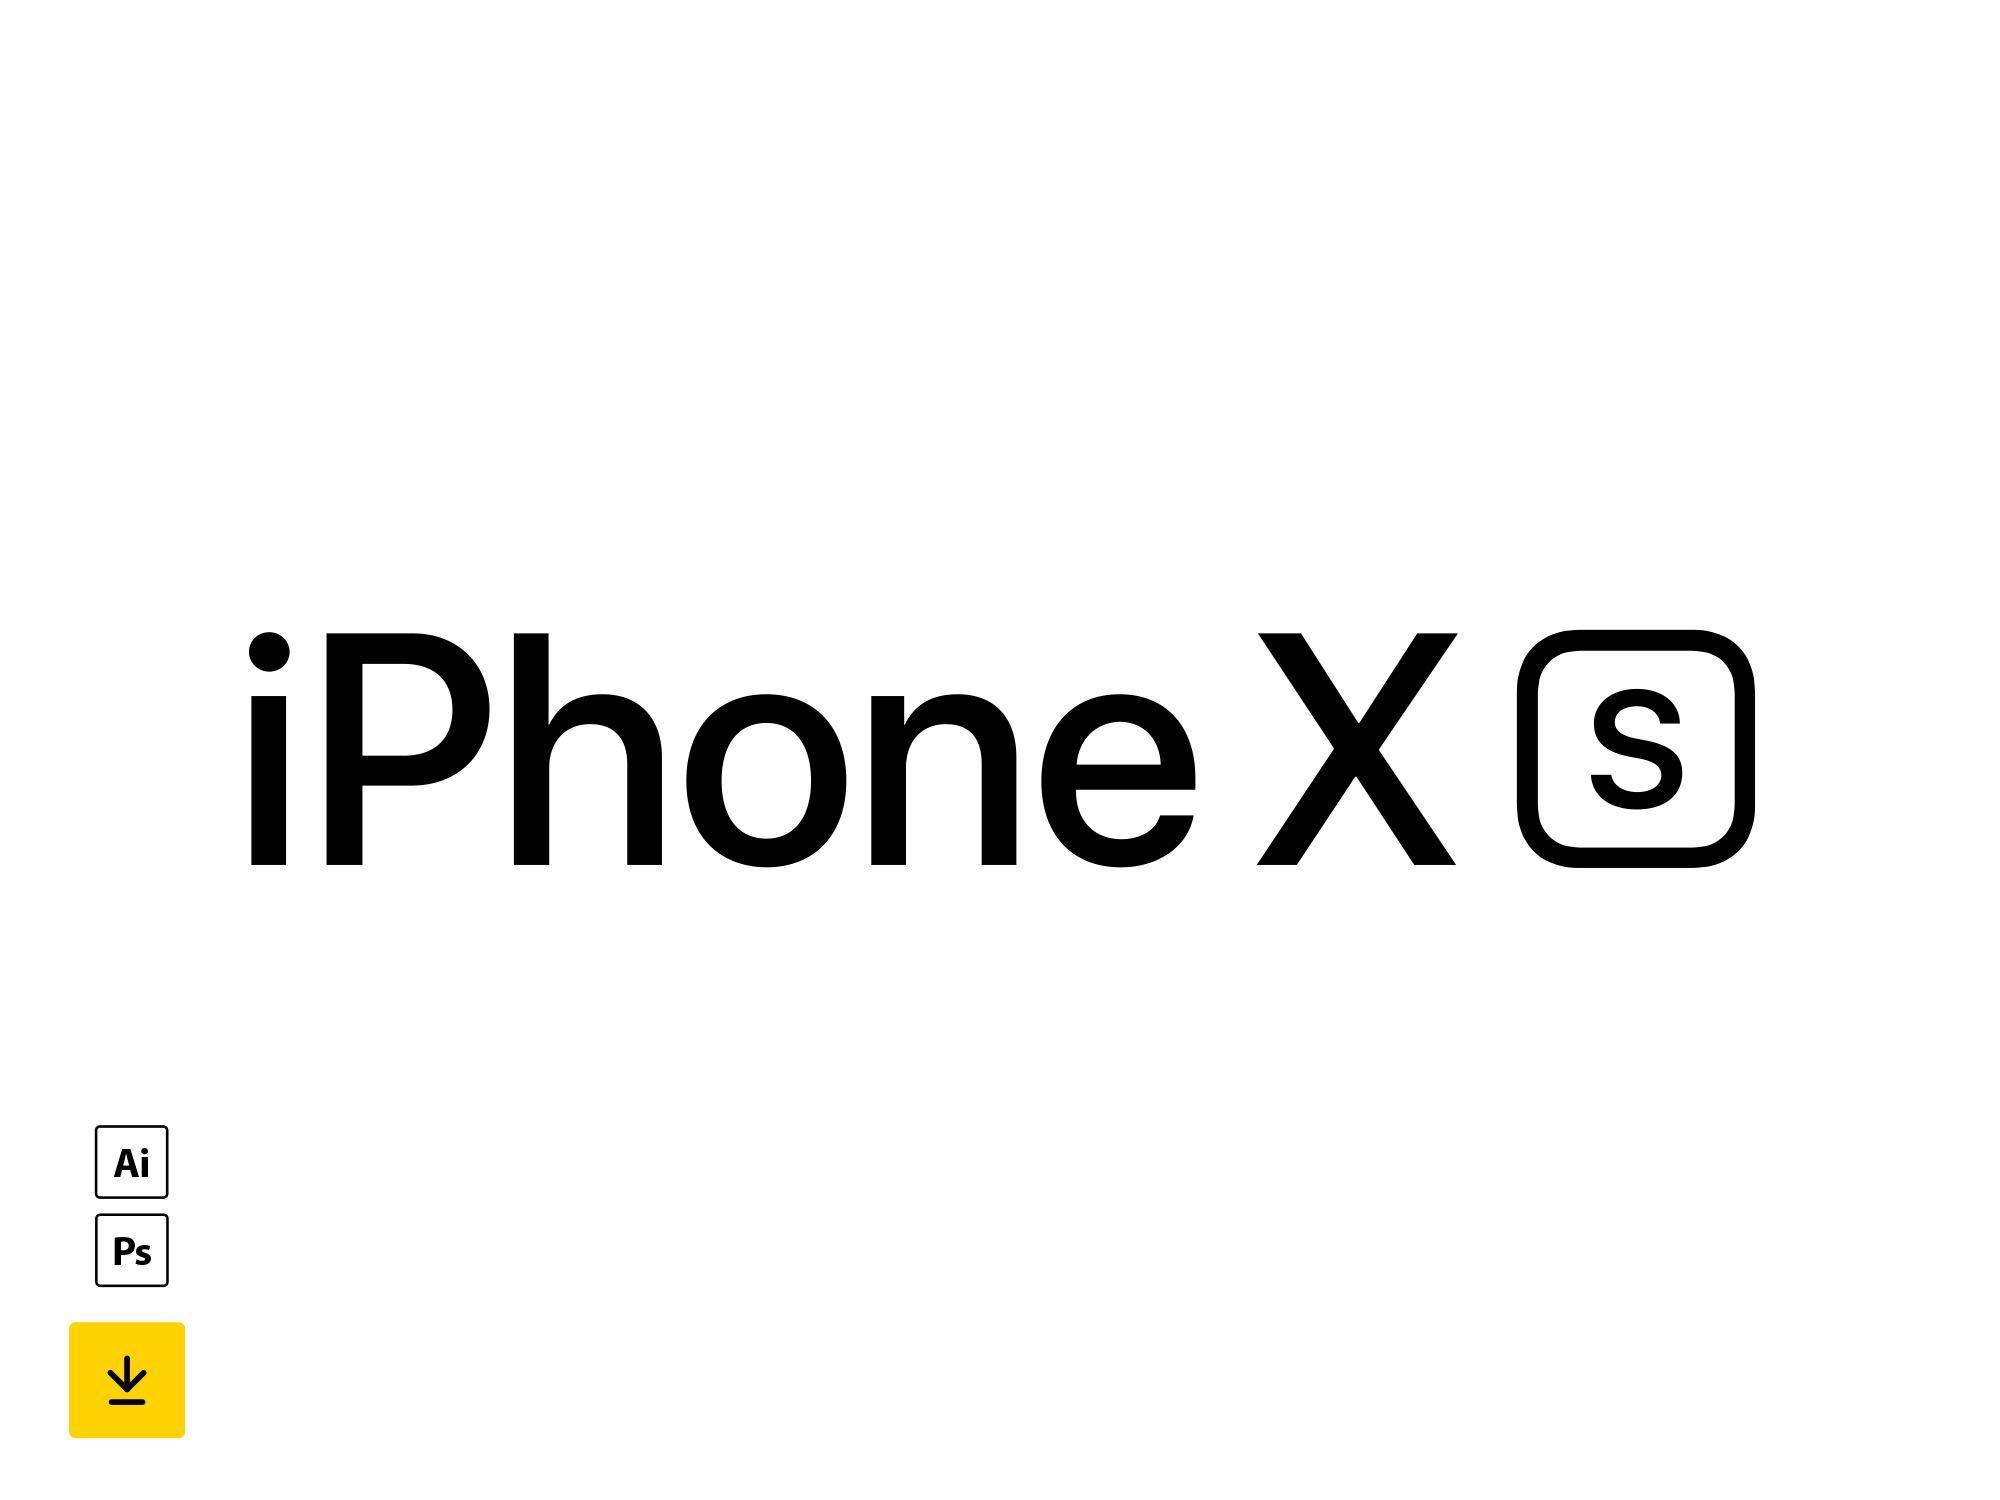 XS Logo - iPhone XS Vector Logo by Unblast on Dribbble